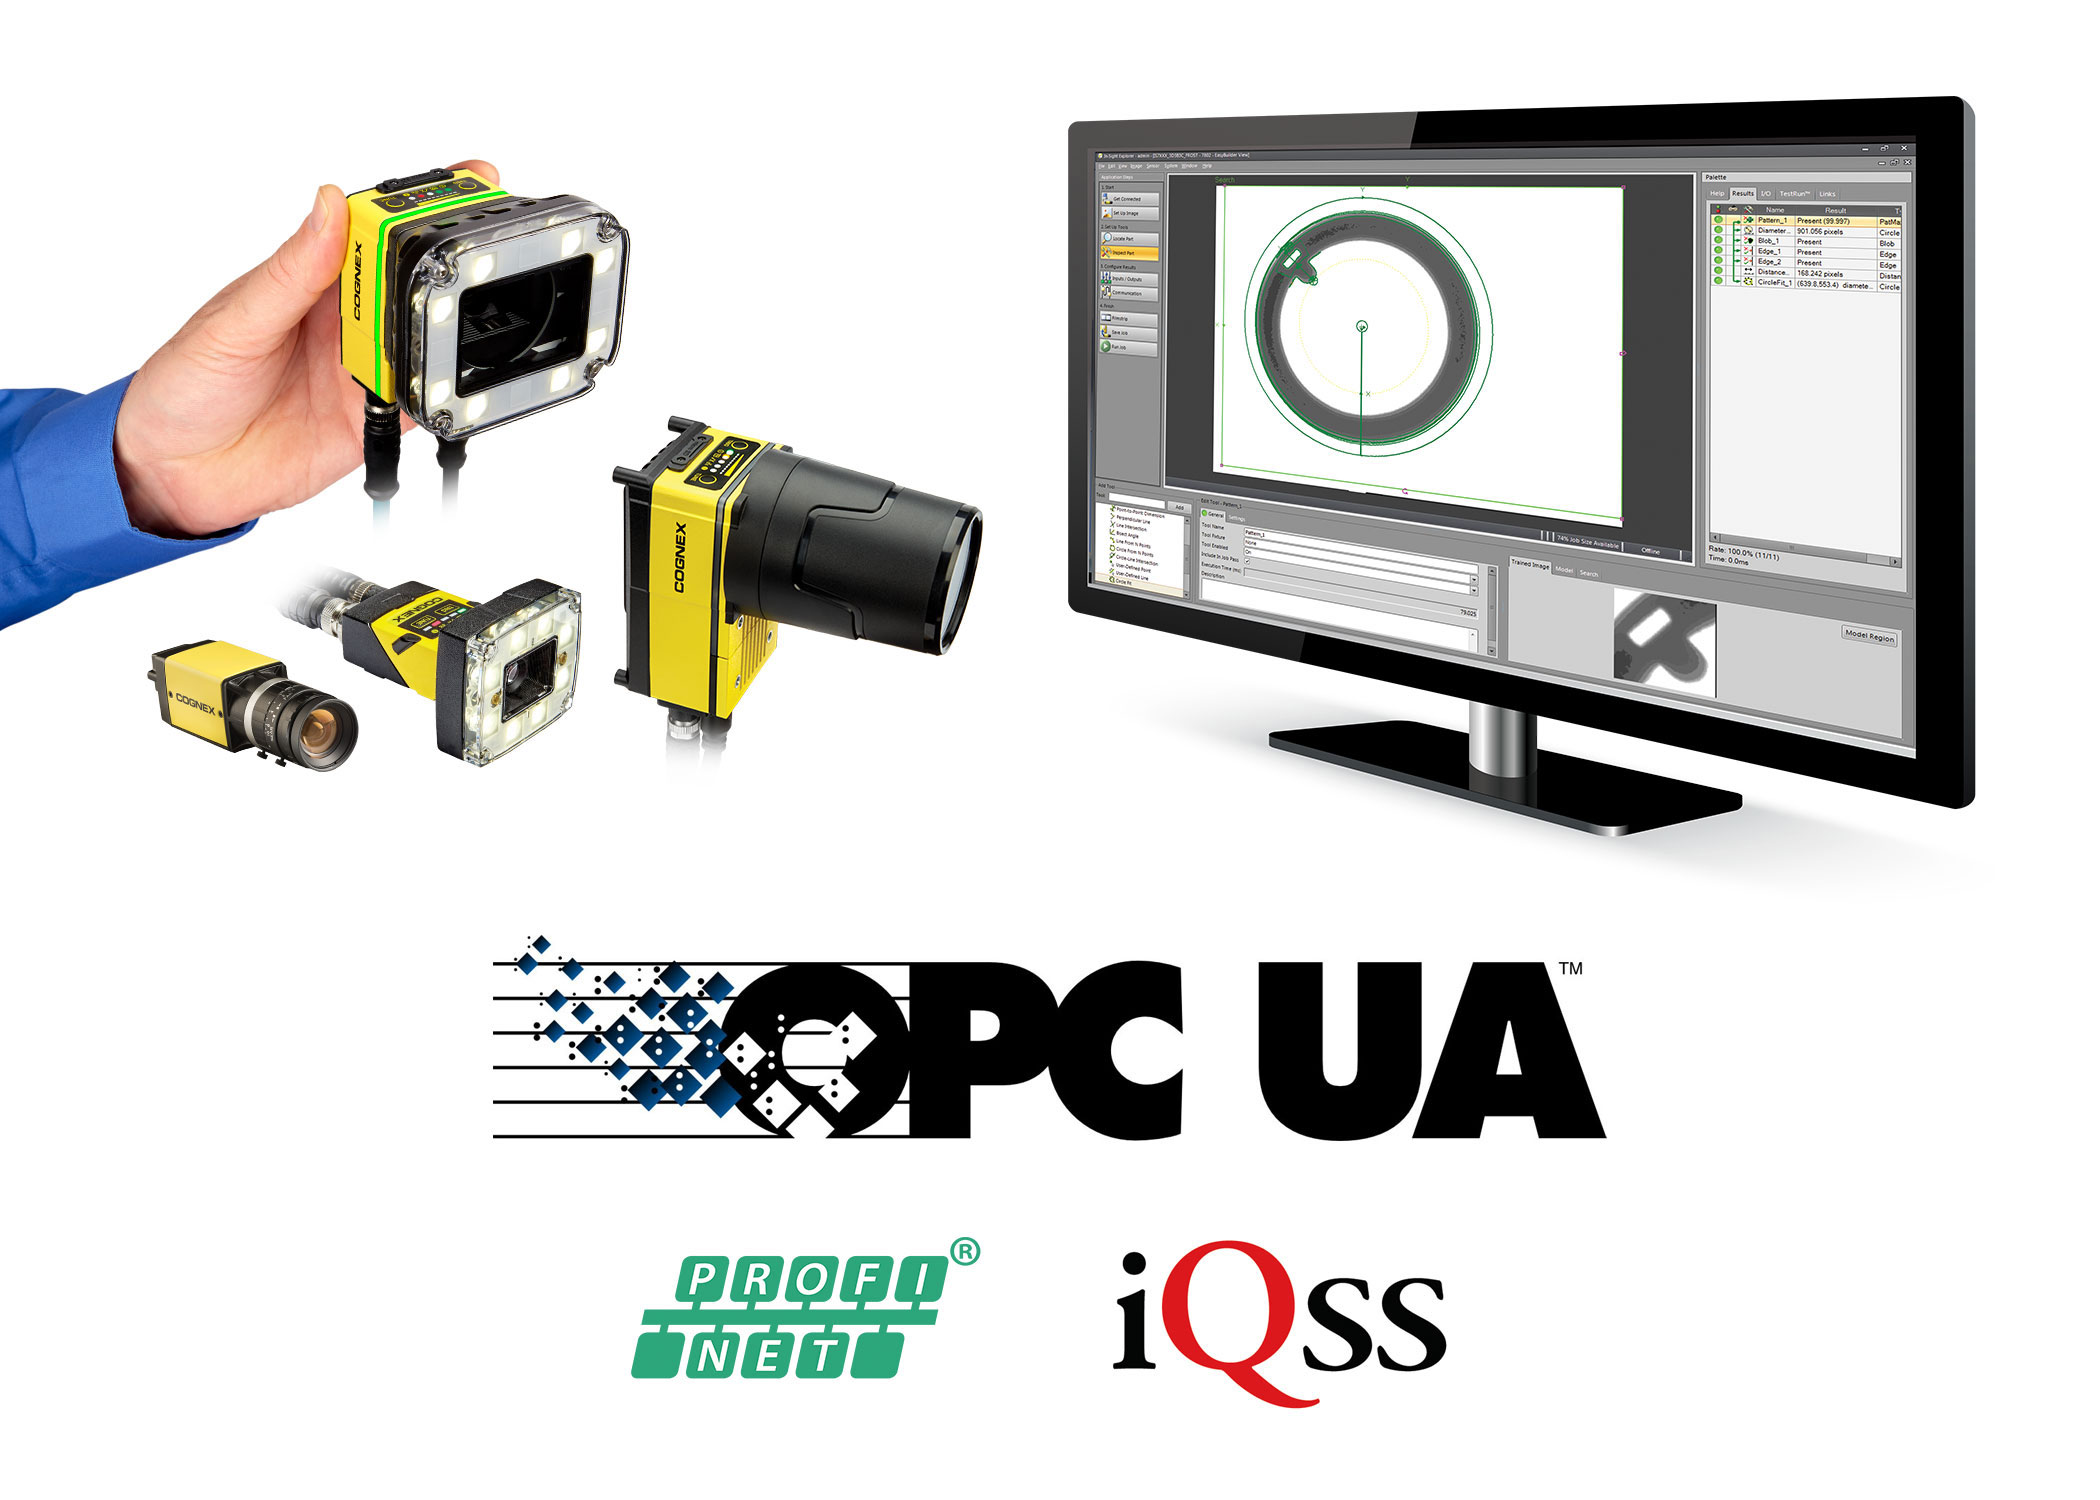 OPC-UA PROFINET IQSSSS COGNEX Vision系统和监视器软件